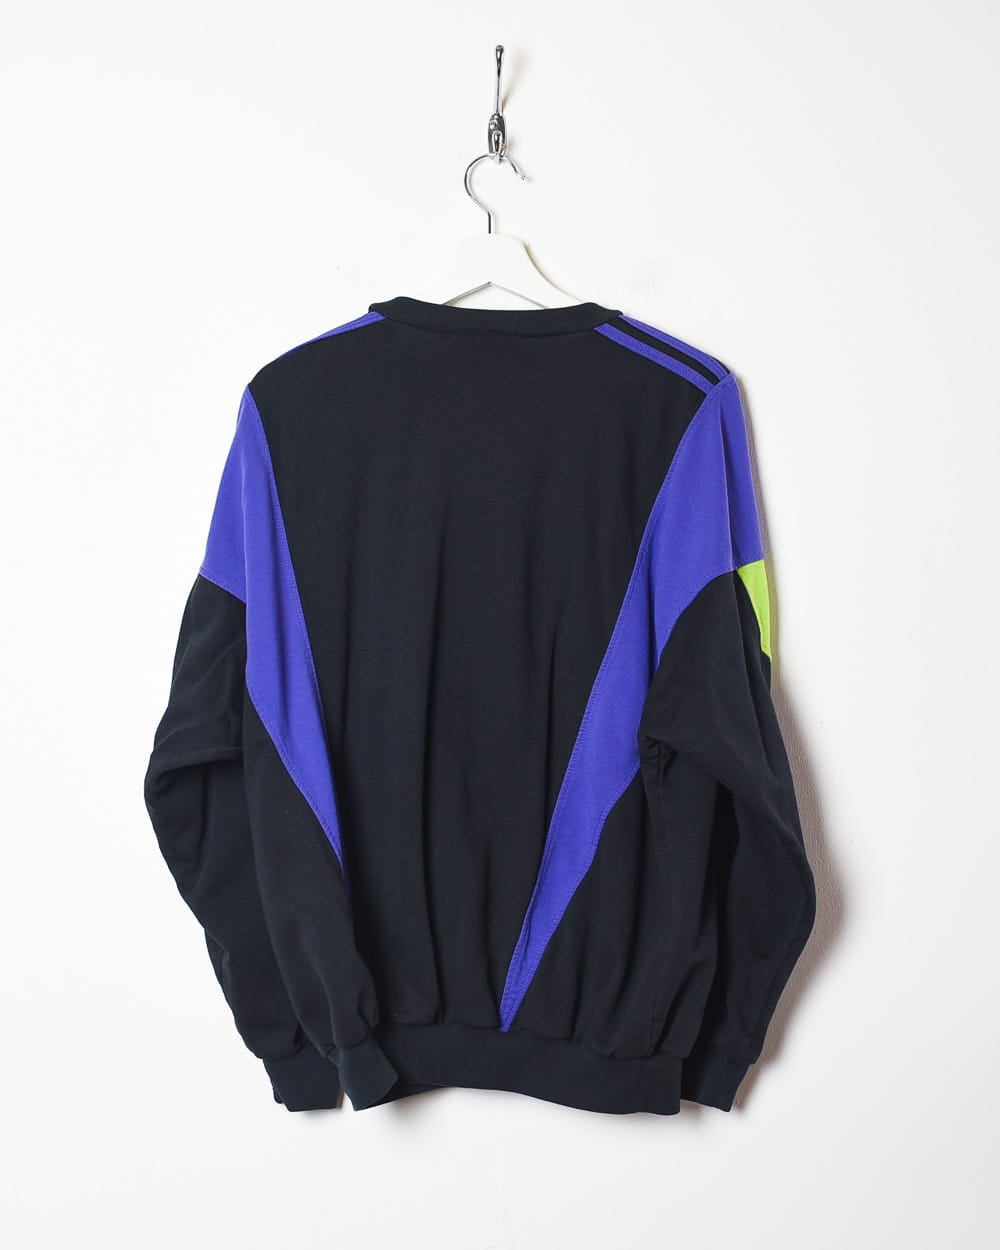 Black Adidas Graphic Sweatshirt - Small